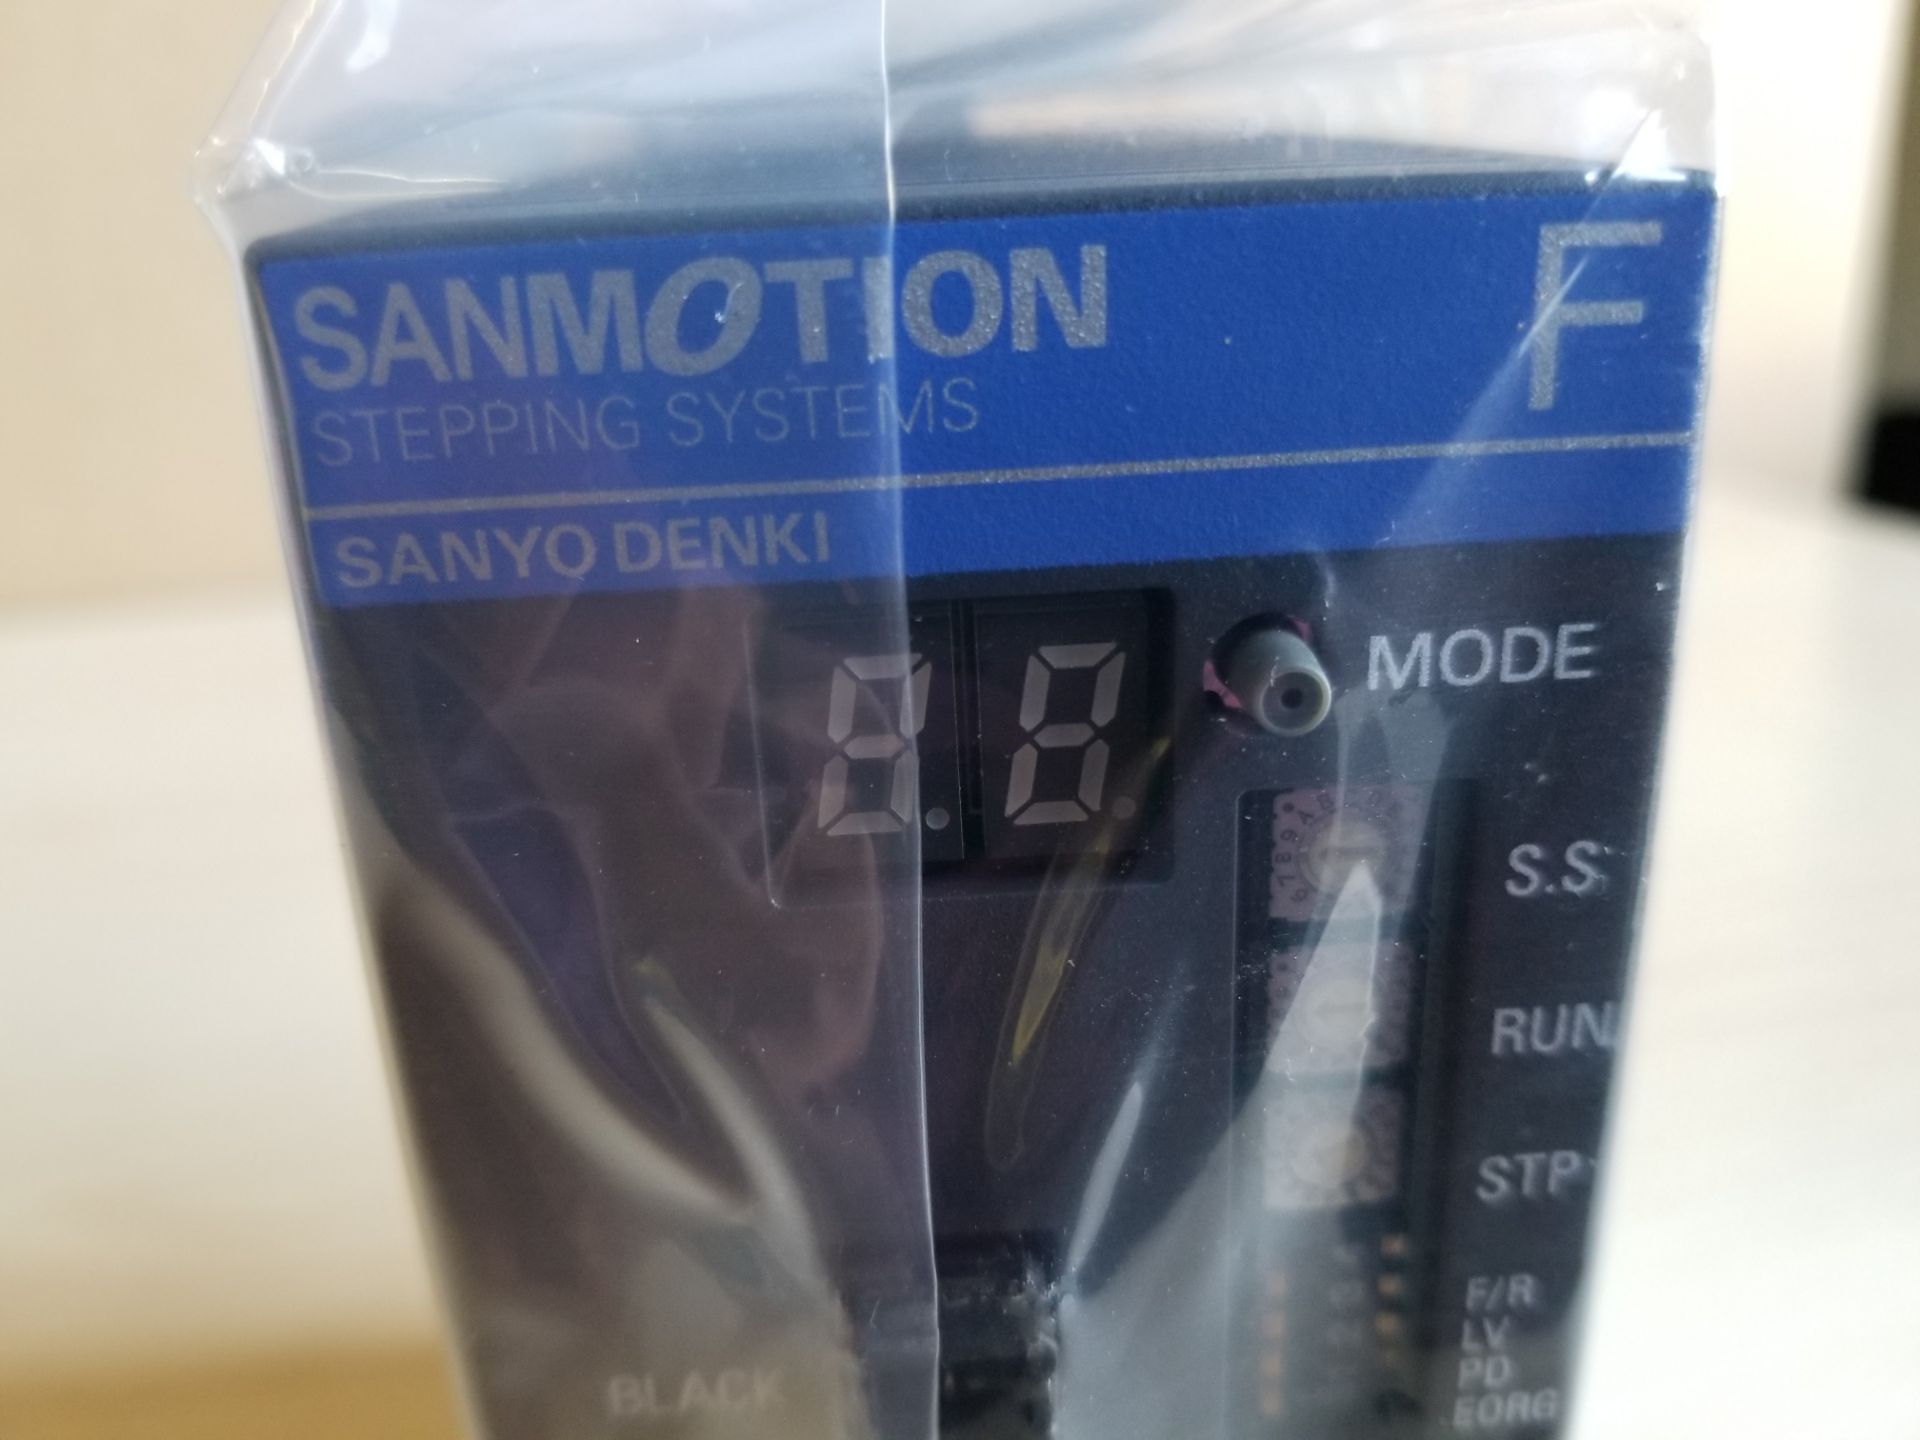 Unused Sanyo Denki SanMotion F Stepper Motor Drive - Image 3 of 4